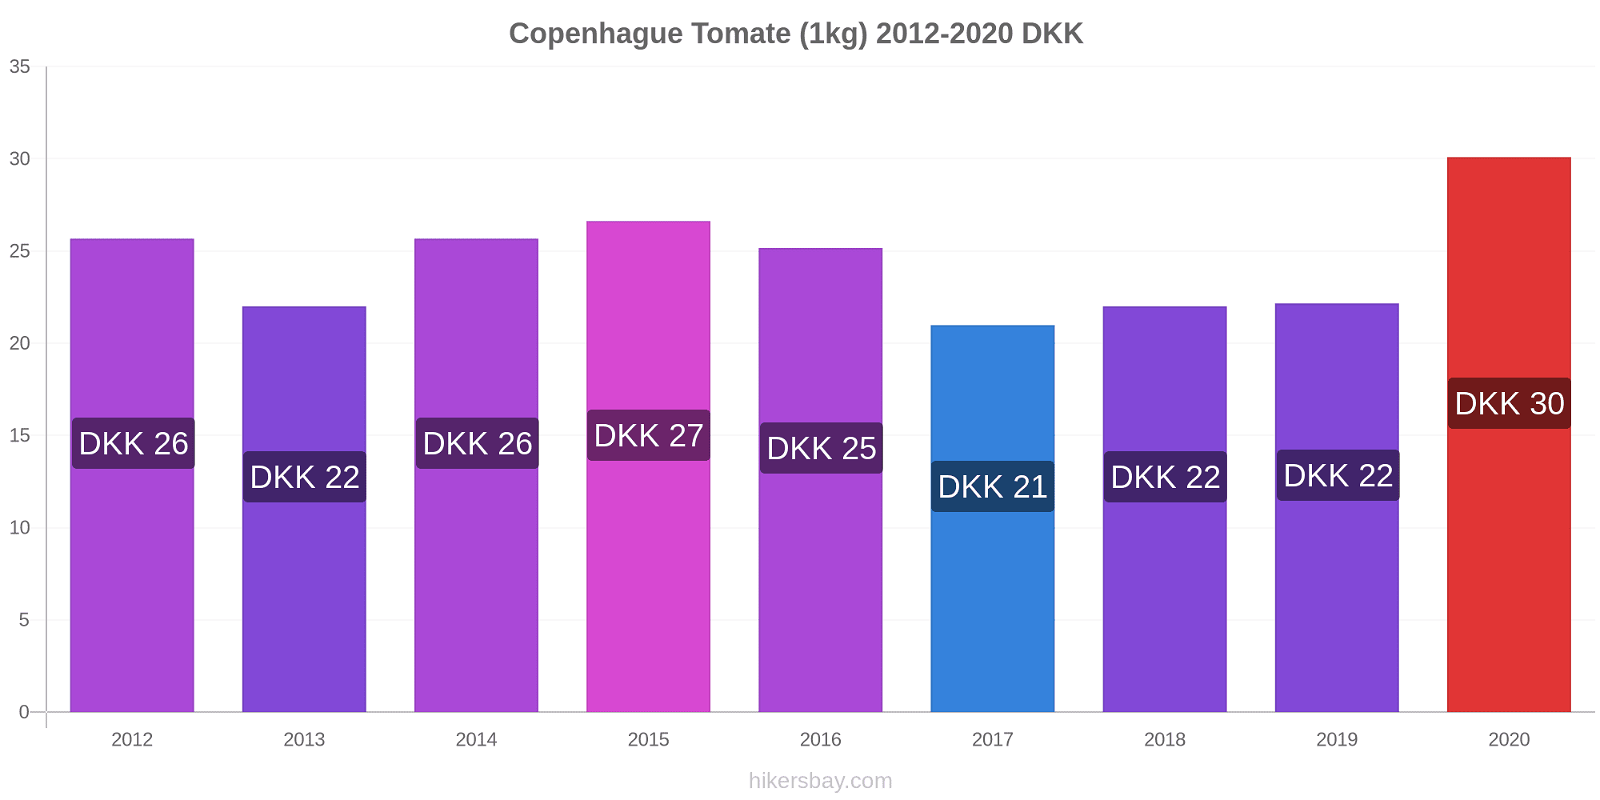 Copenhague cambios de precios Tomate (1kg) hikersbay.com